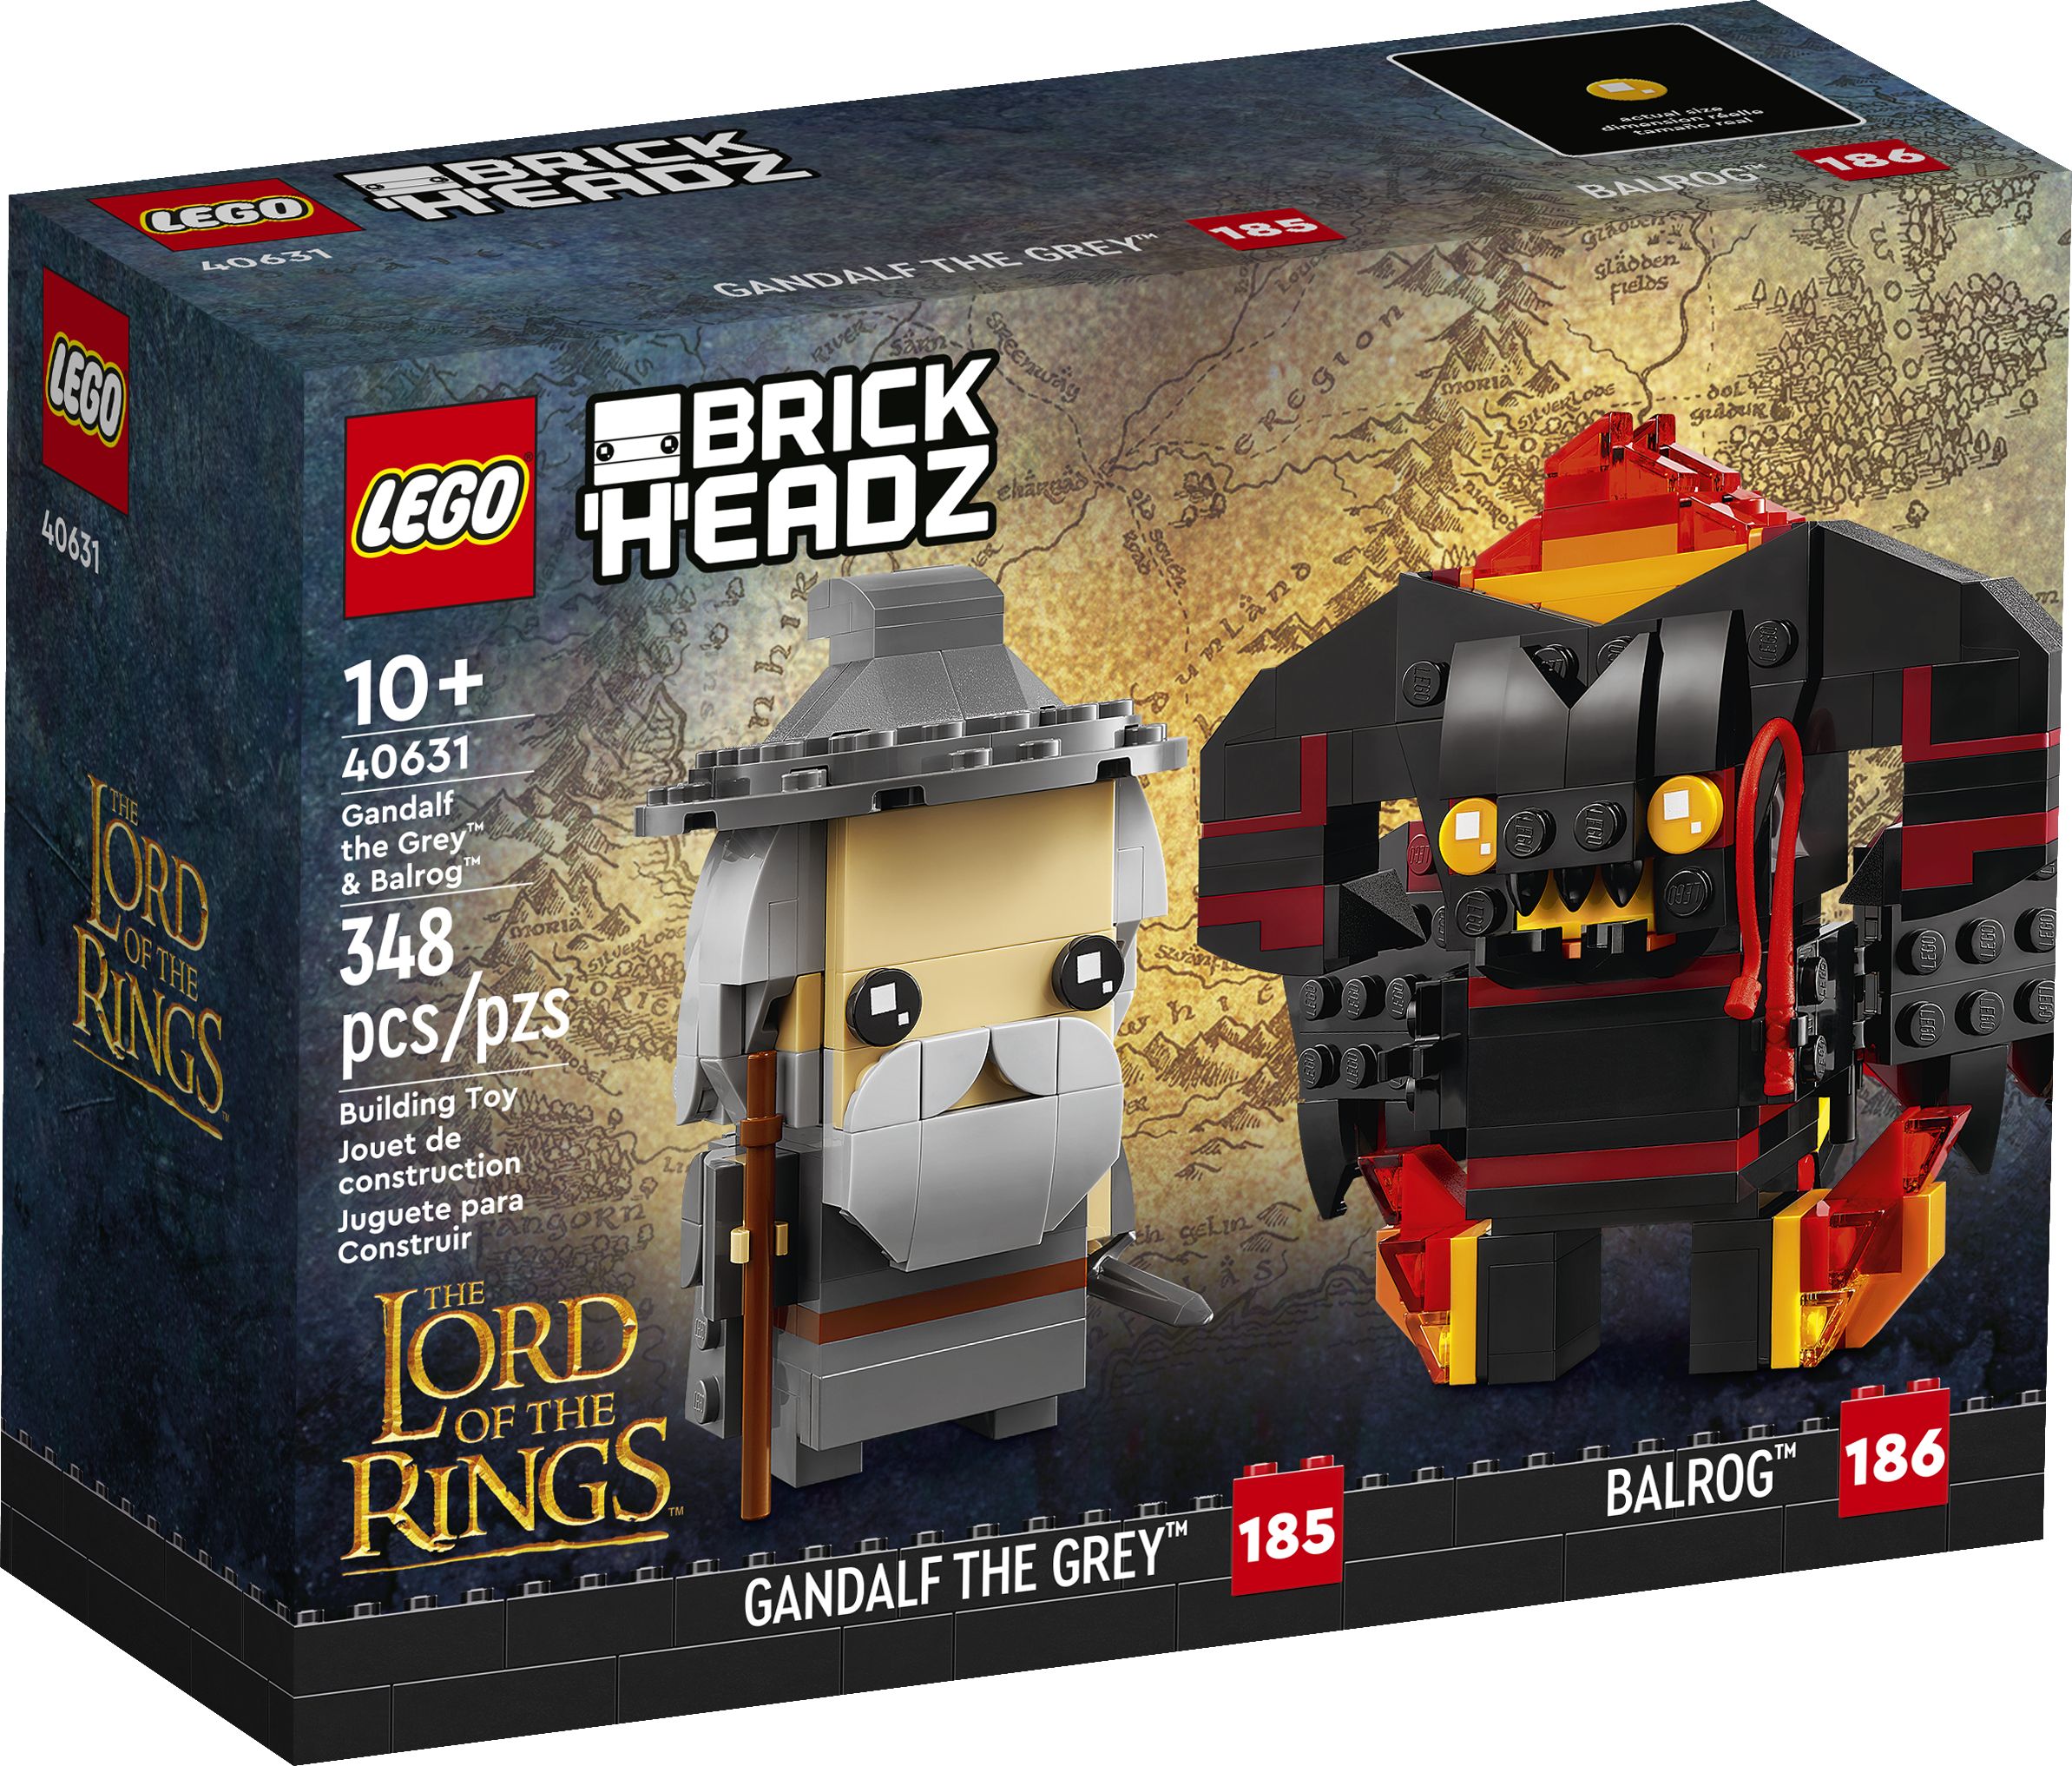 LEGO BrickHeadz 40631 Gandalf der Graue und Balrog™ LEGO_40631_Box1_v39.jpg